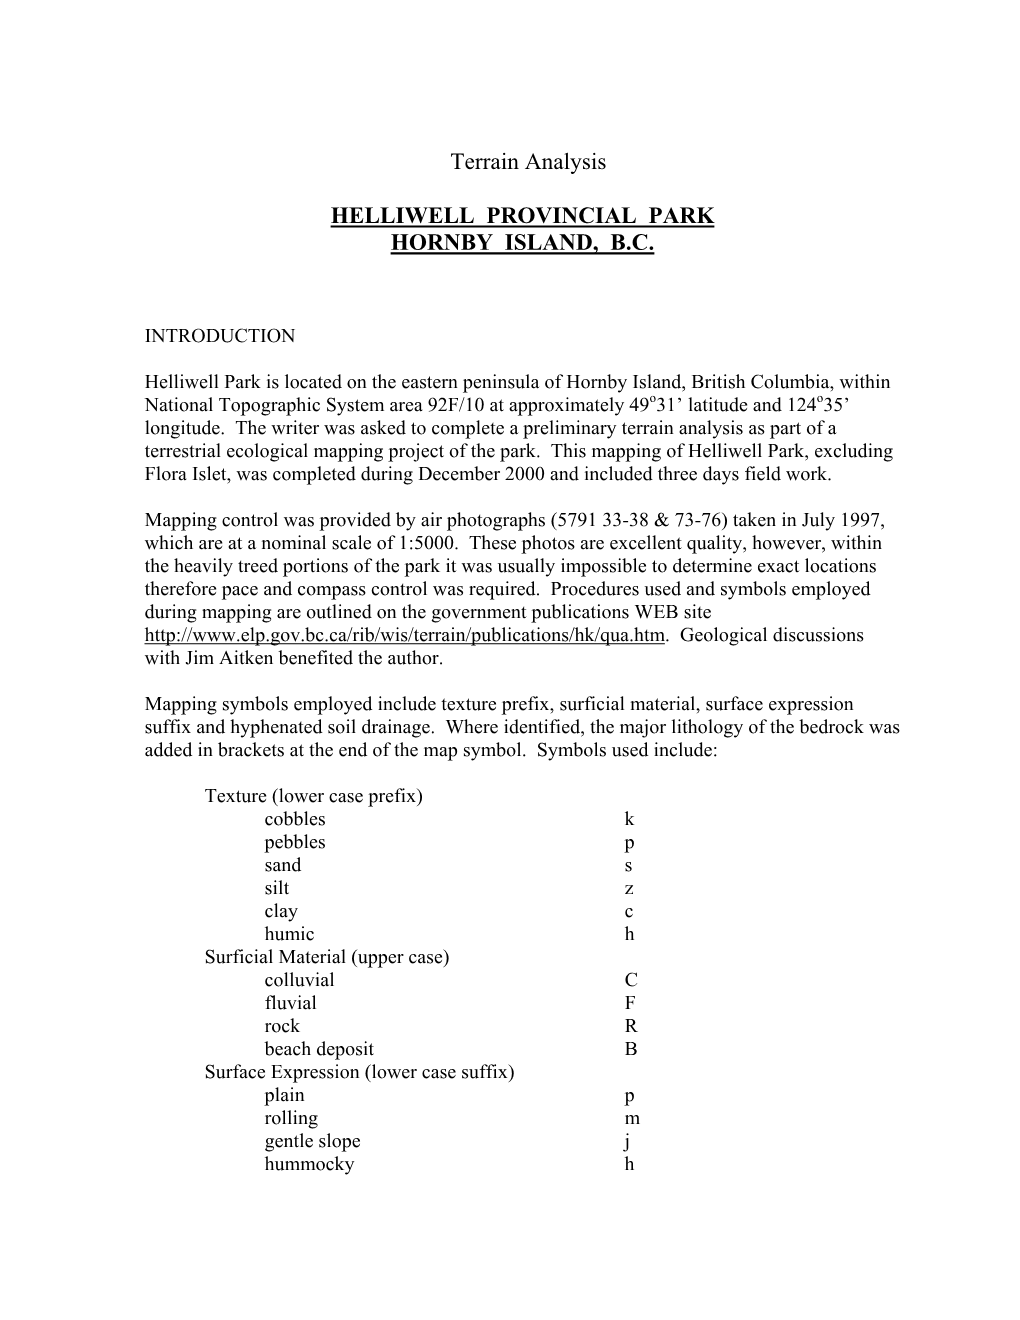 Terrain Analysis HELLIWELL PROVINCIAL PARK HORNBY